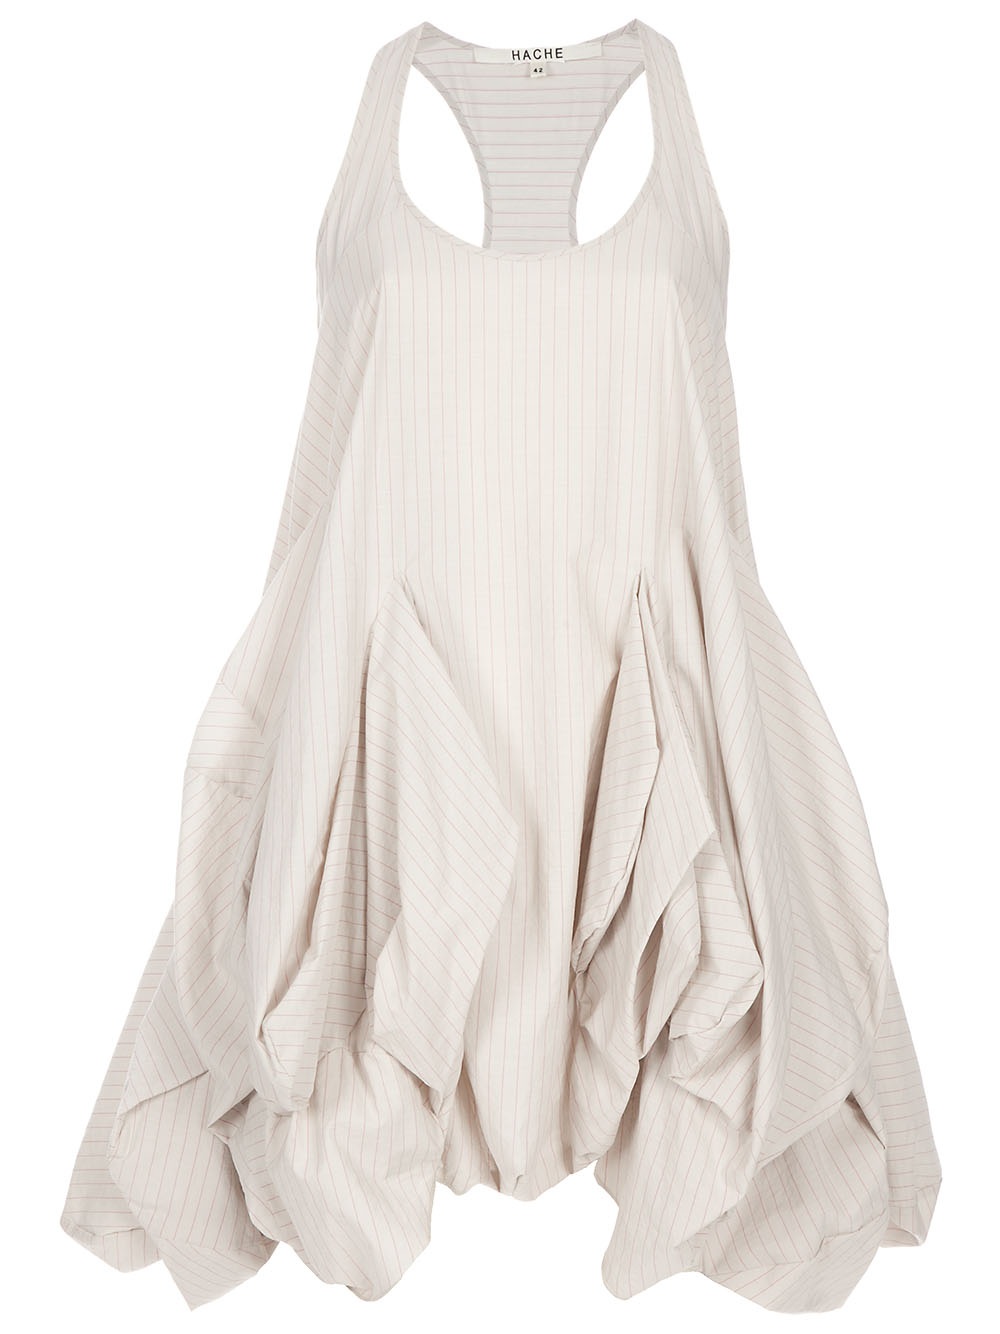 Hache Parachute Dress in White (beige) | Lyst